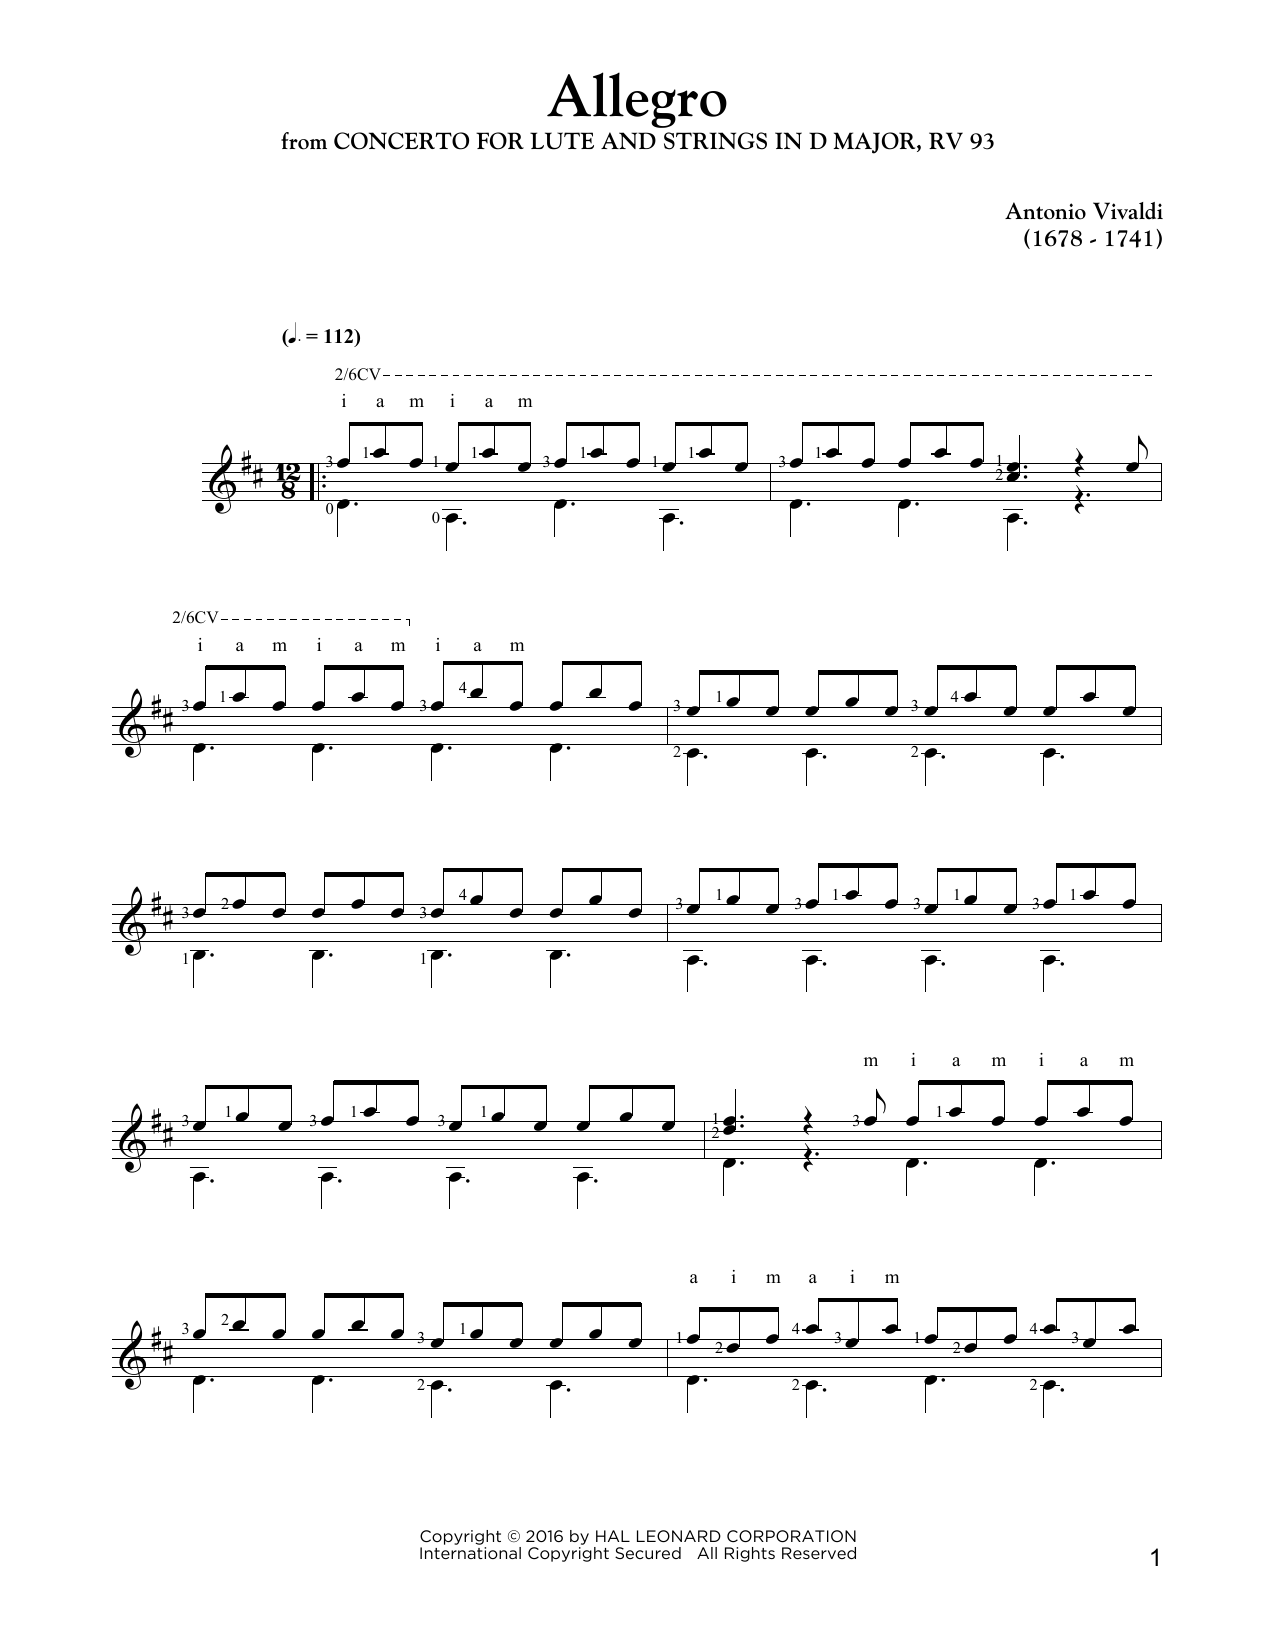 Antonio Vivaldi Allegro Sheet Music Notes & Chords for Solo Guitar - Download or Print PDF